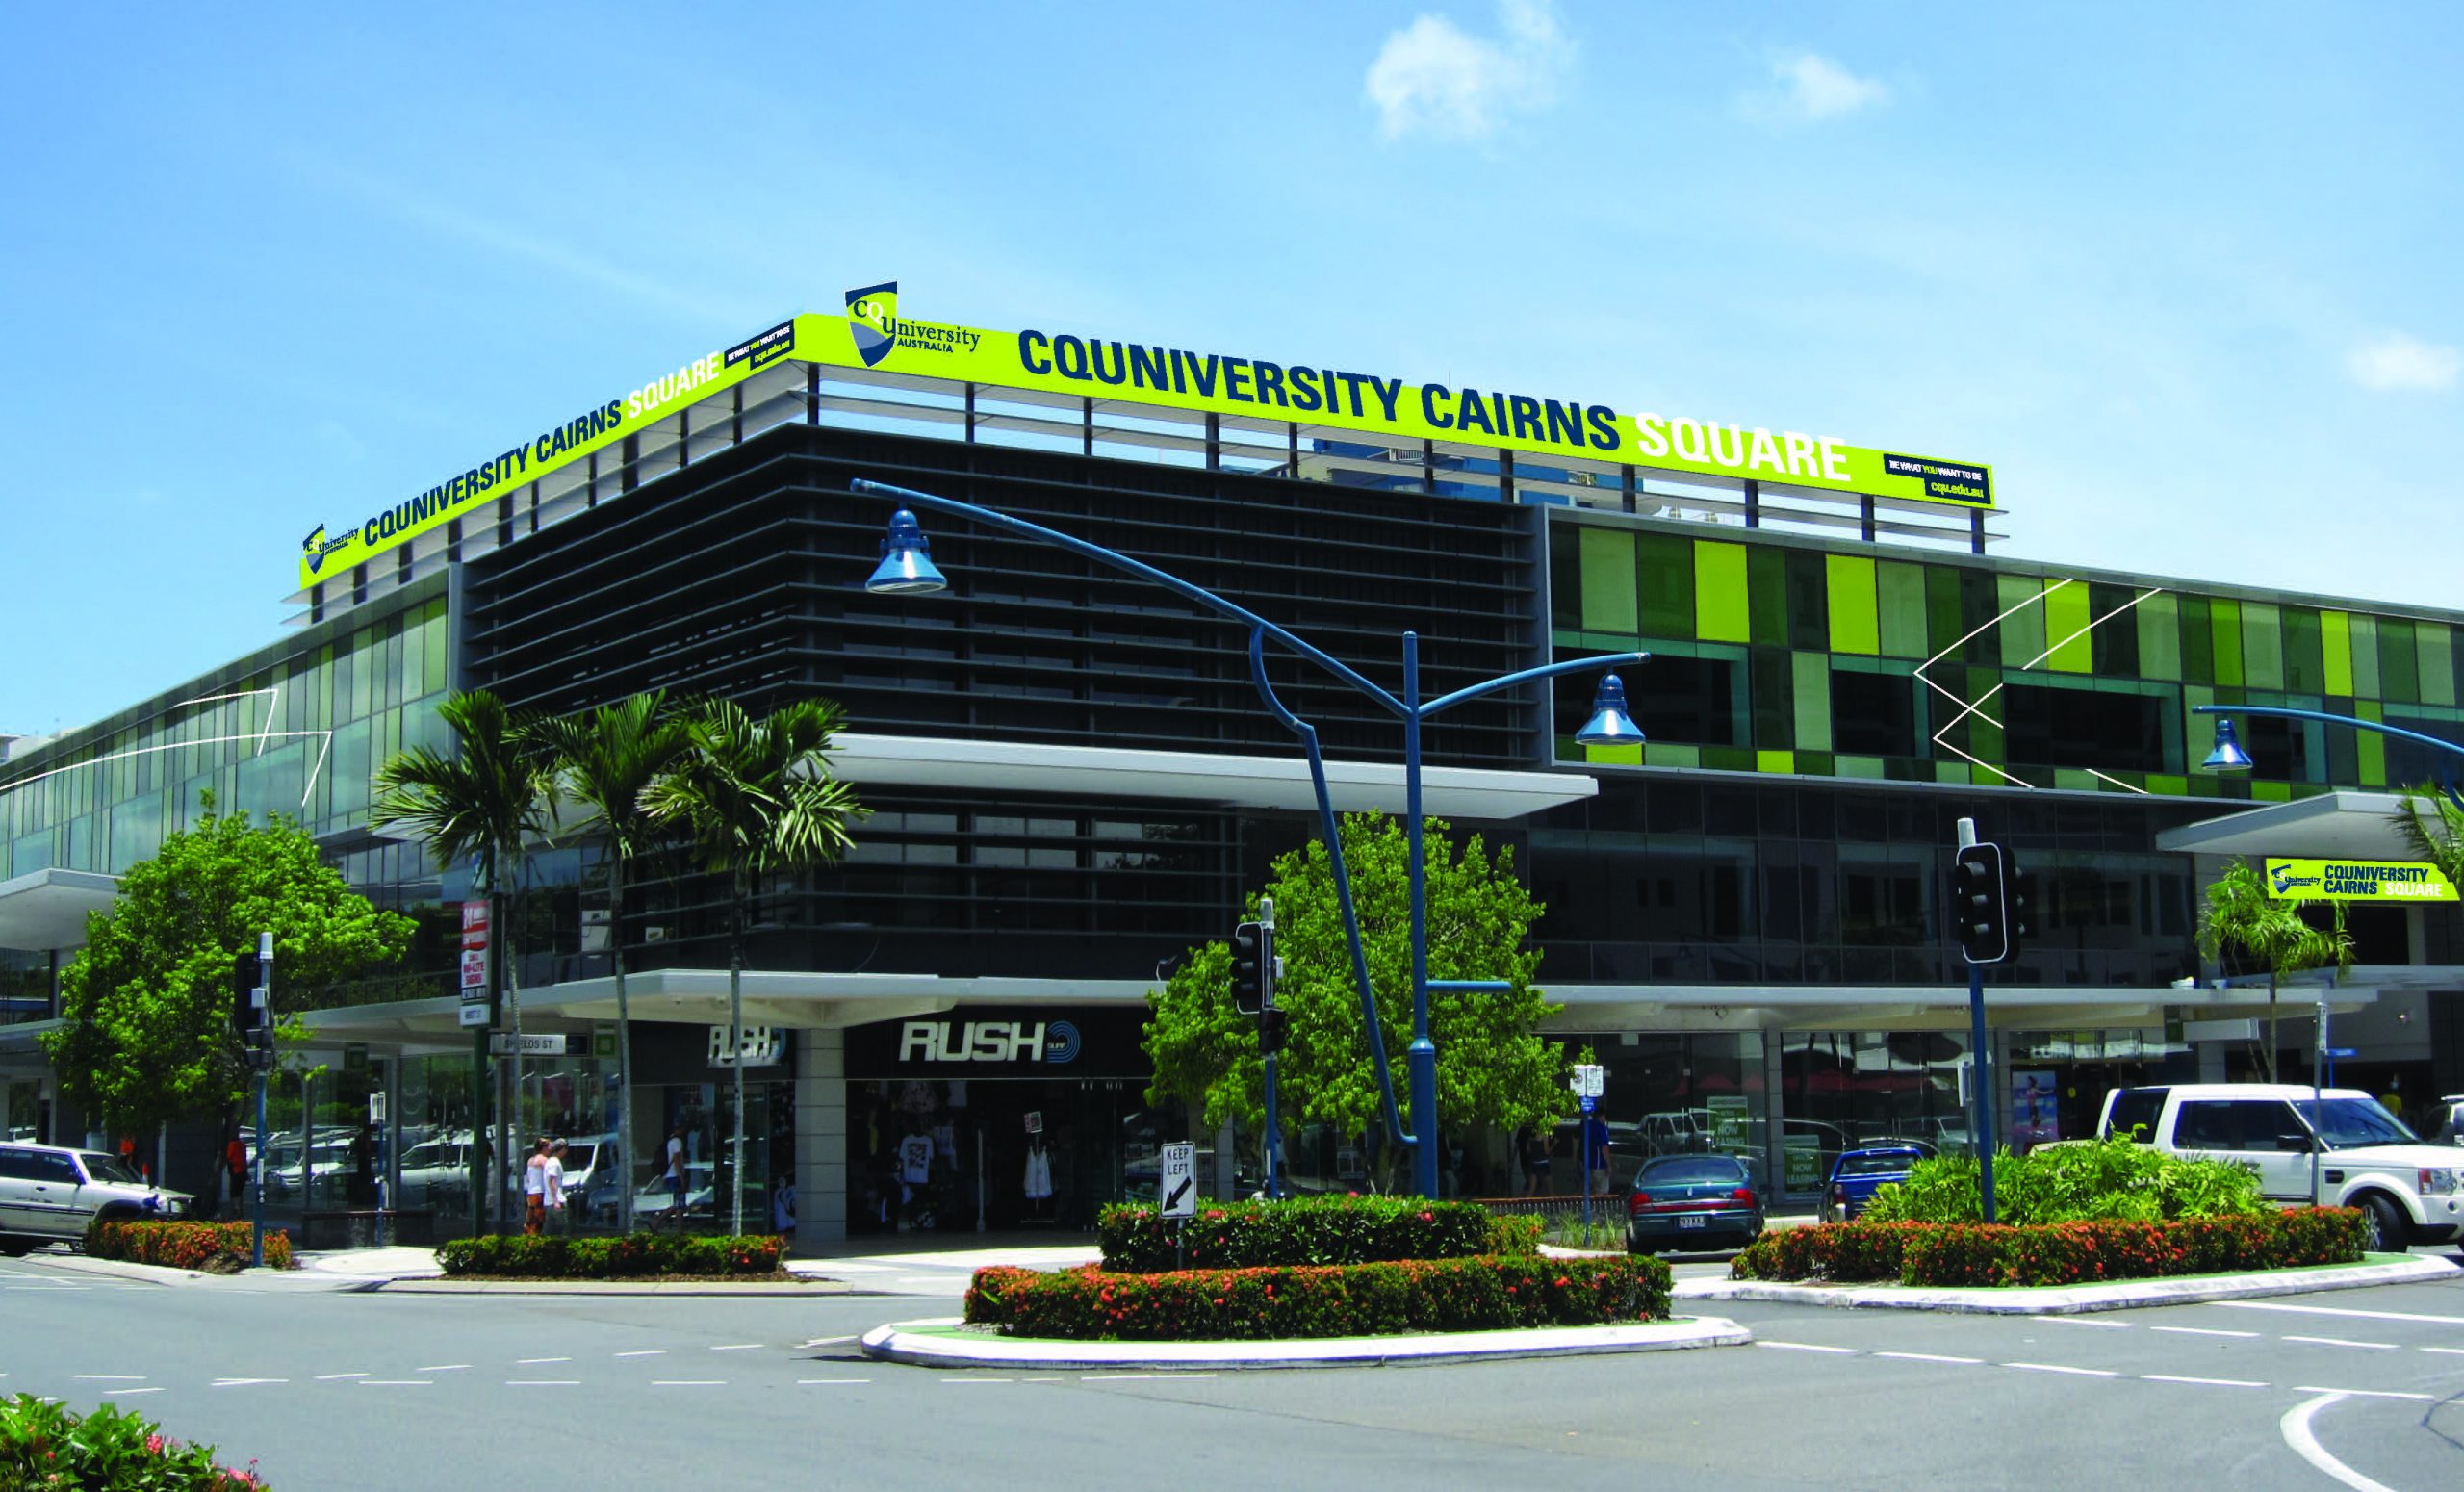 Central Queensland University Scholarship